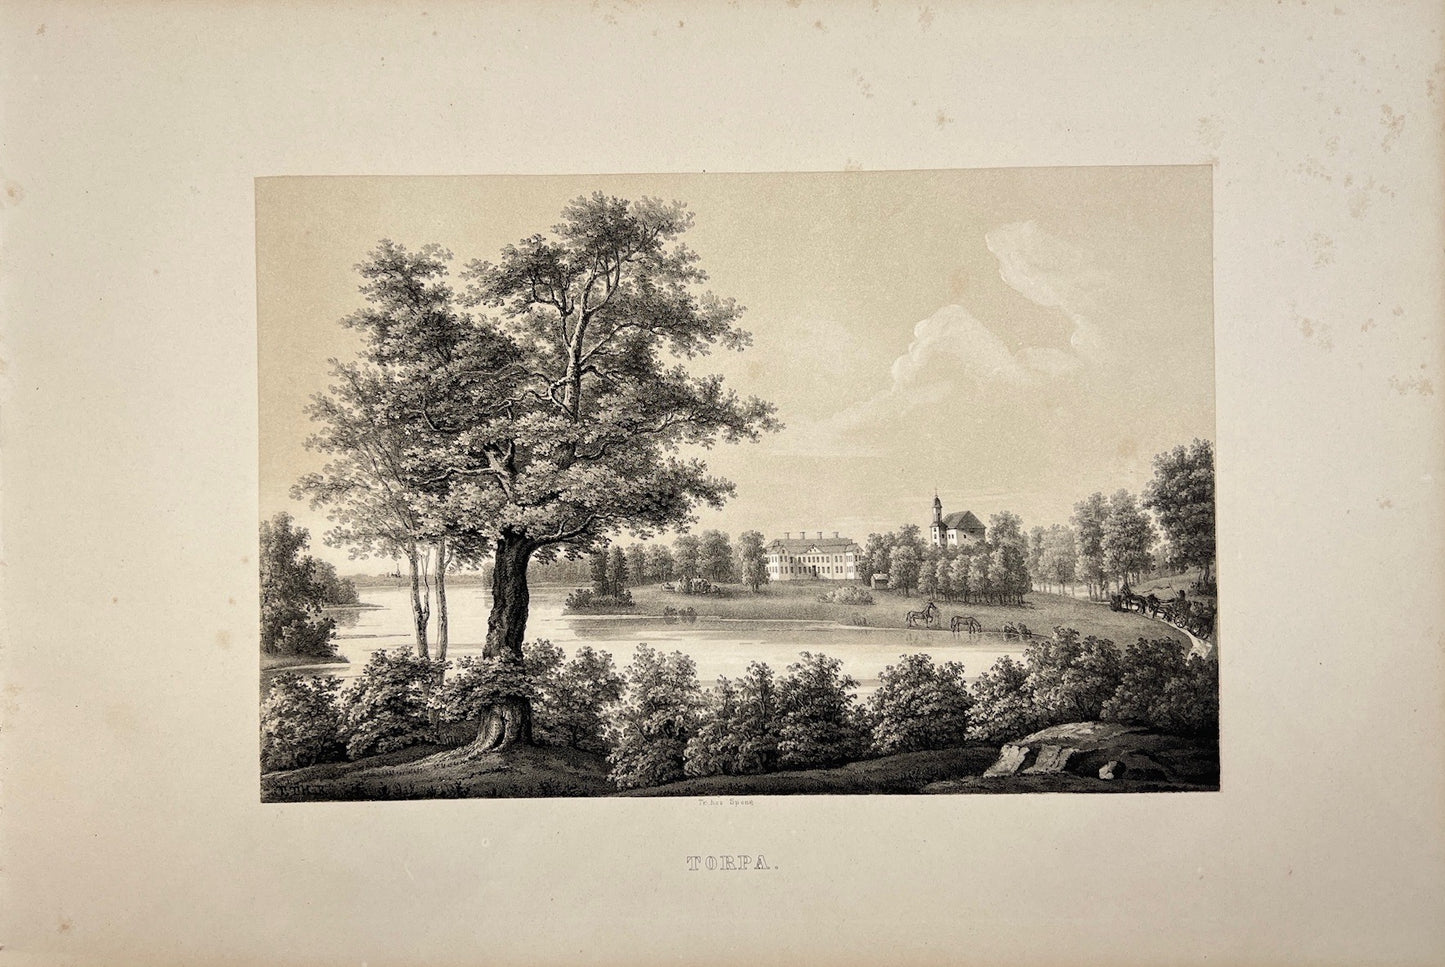 Antique Print - View of Torpa - Gothenburg - Harlanda - Sweden - Ulrik Thresher